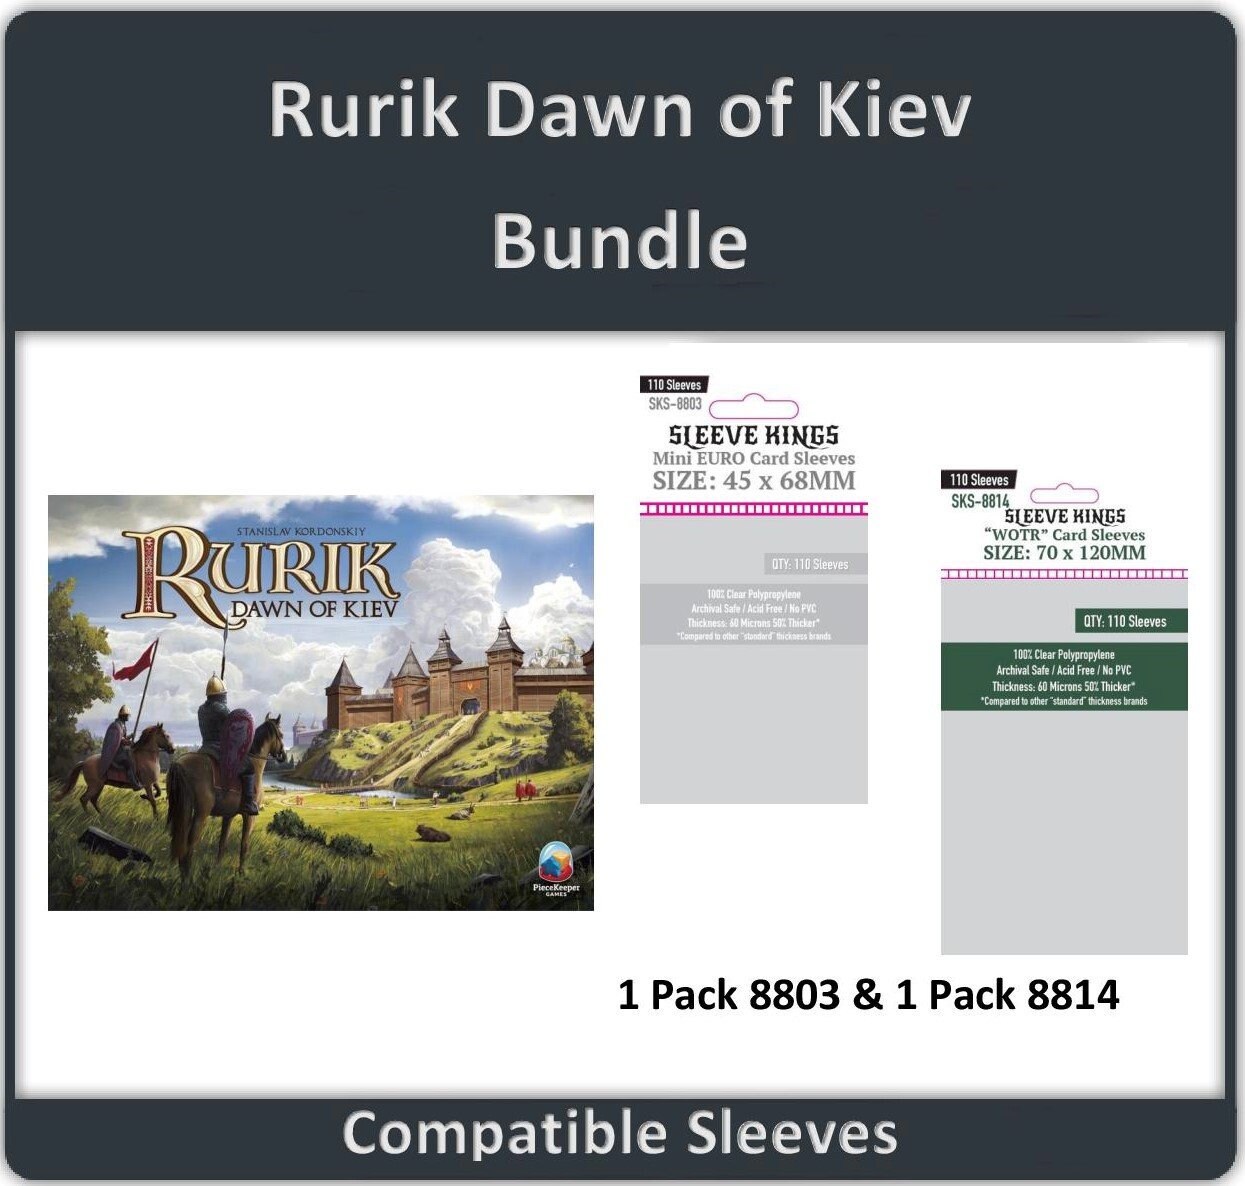 Decrypto Board Game Compatible Card Sleeves - Sleeve Kings – sleevekings